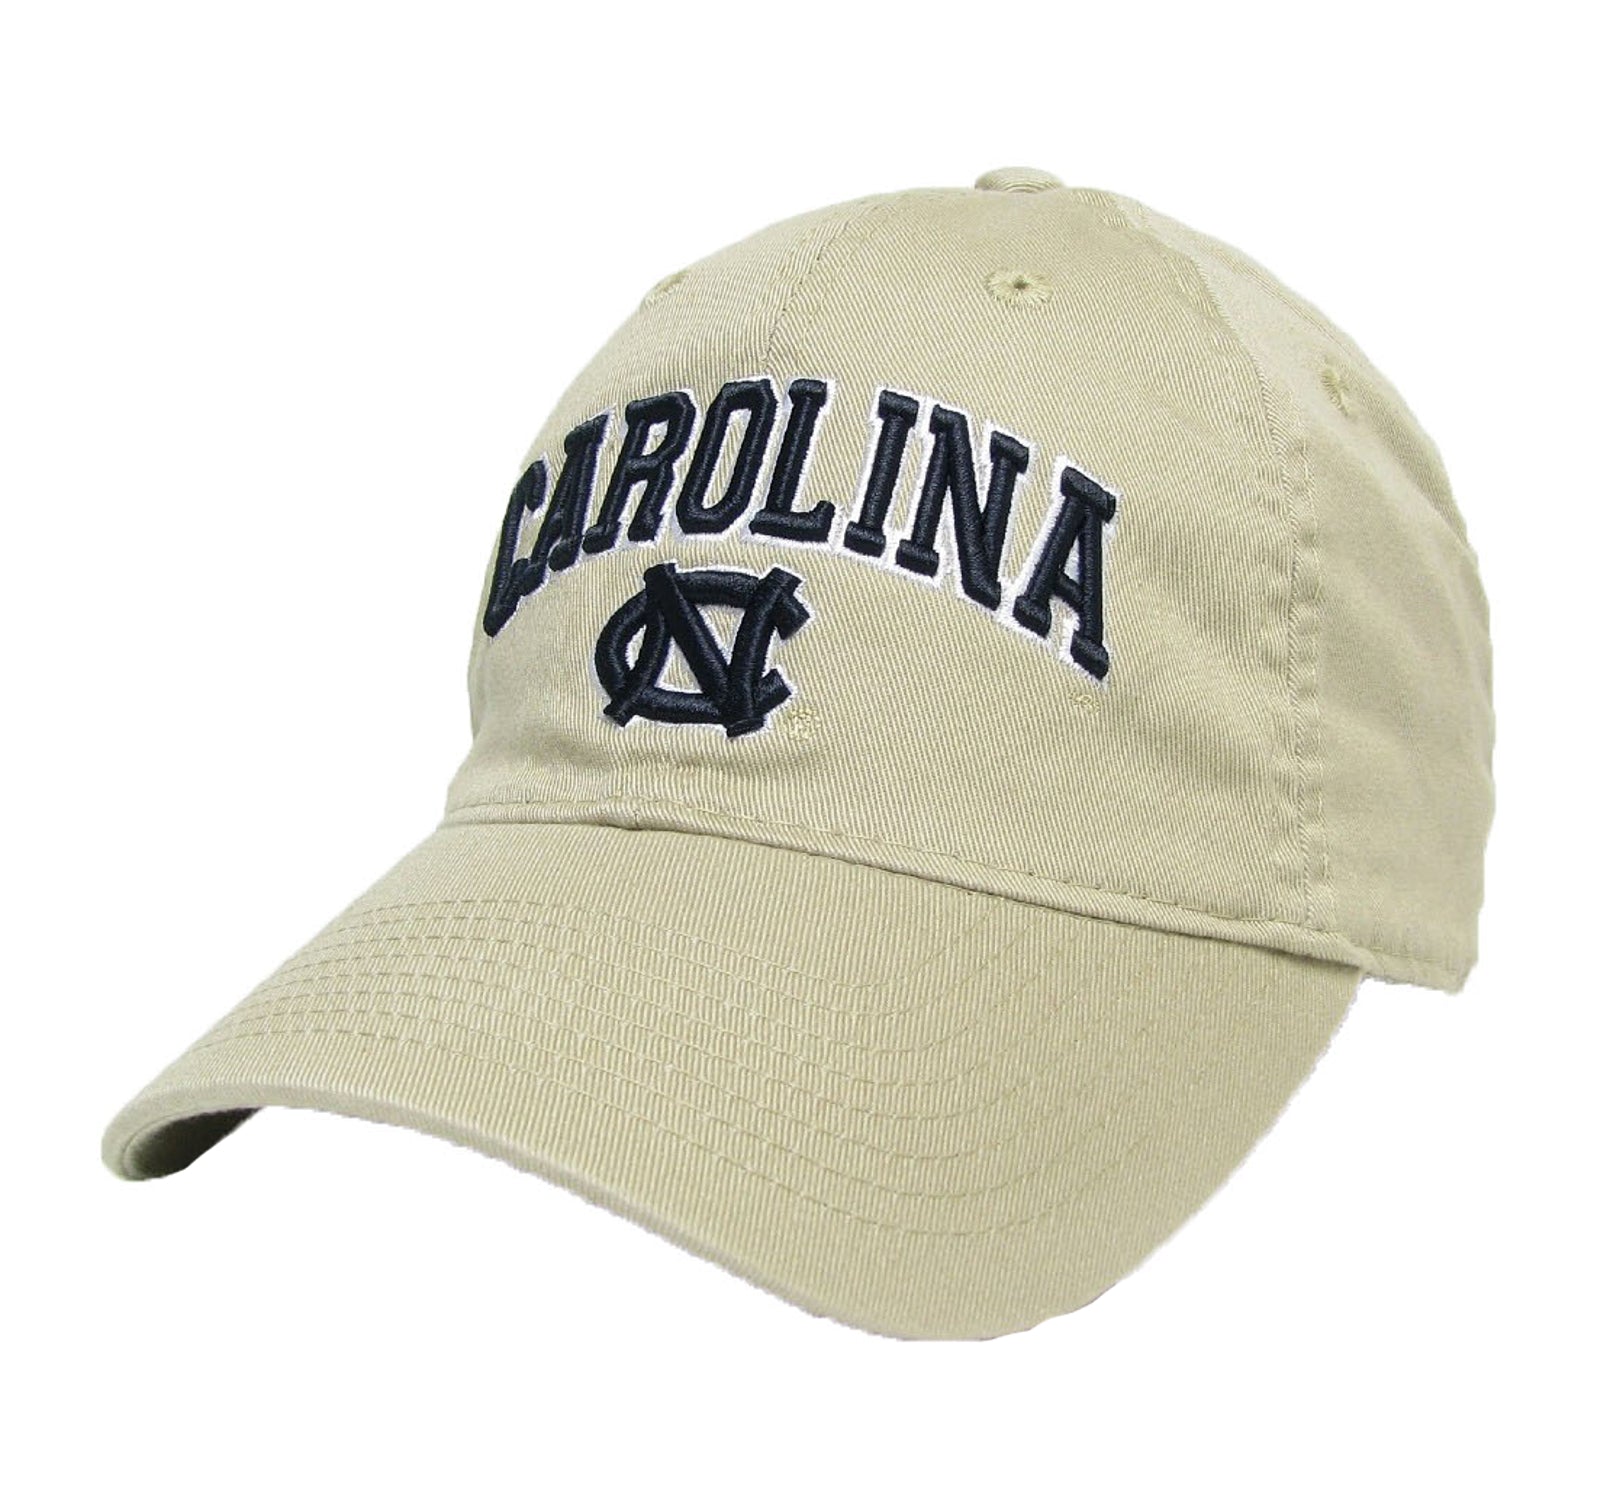 Carolina Basketball Hat by Legacy - UNC Sport Hat – Shrunken Head